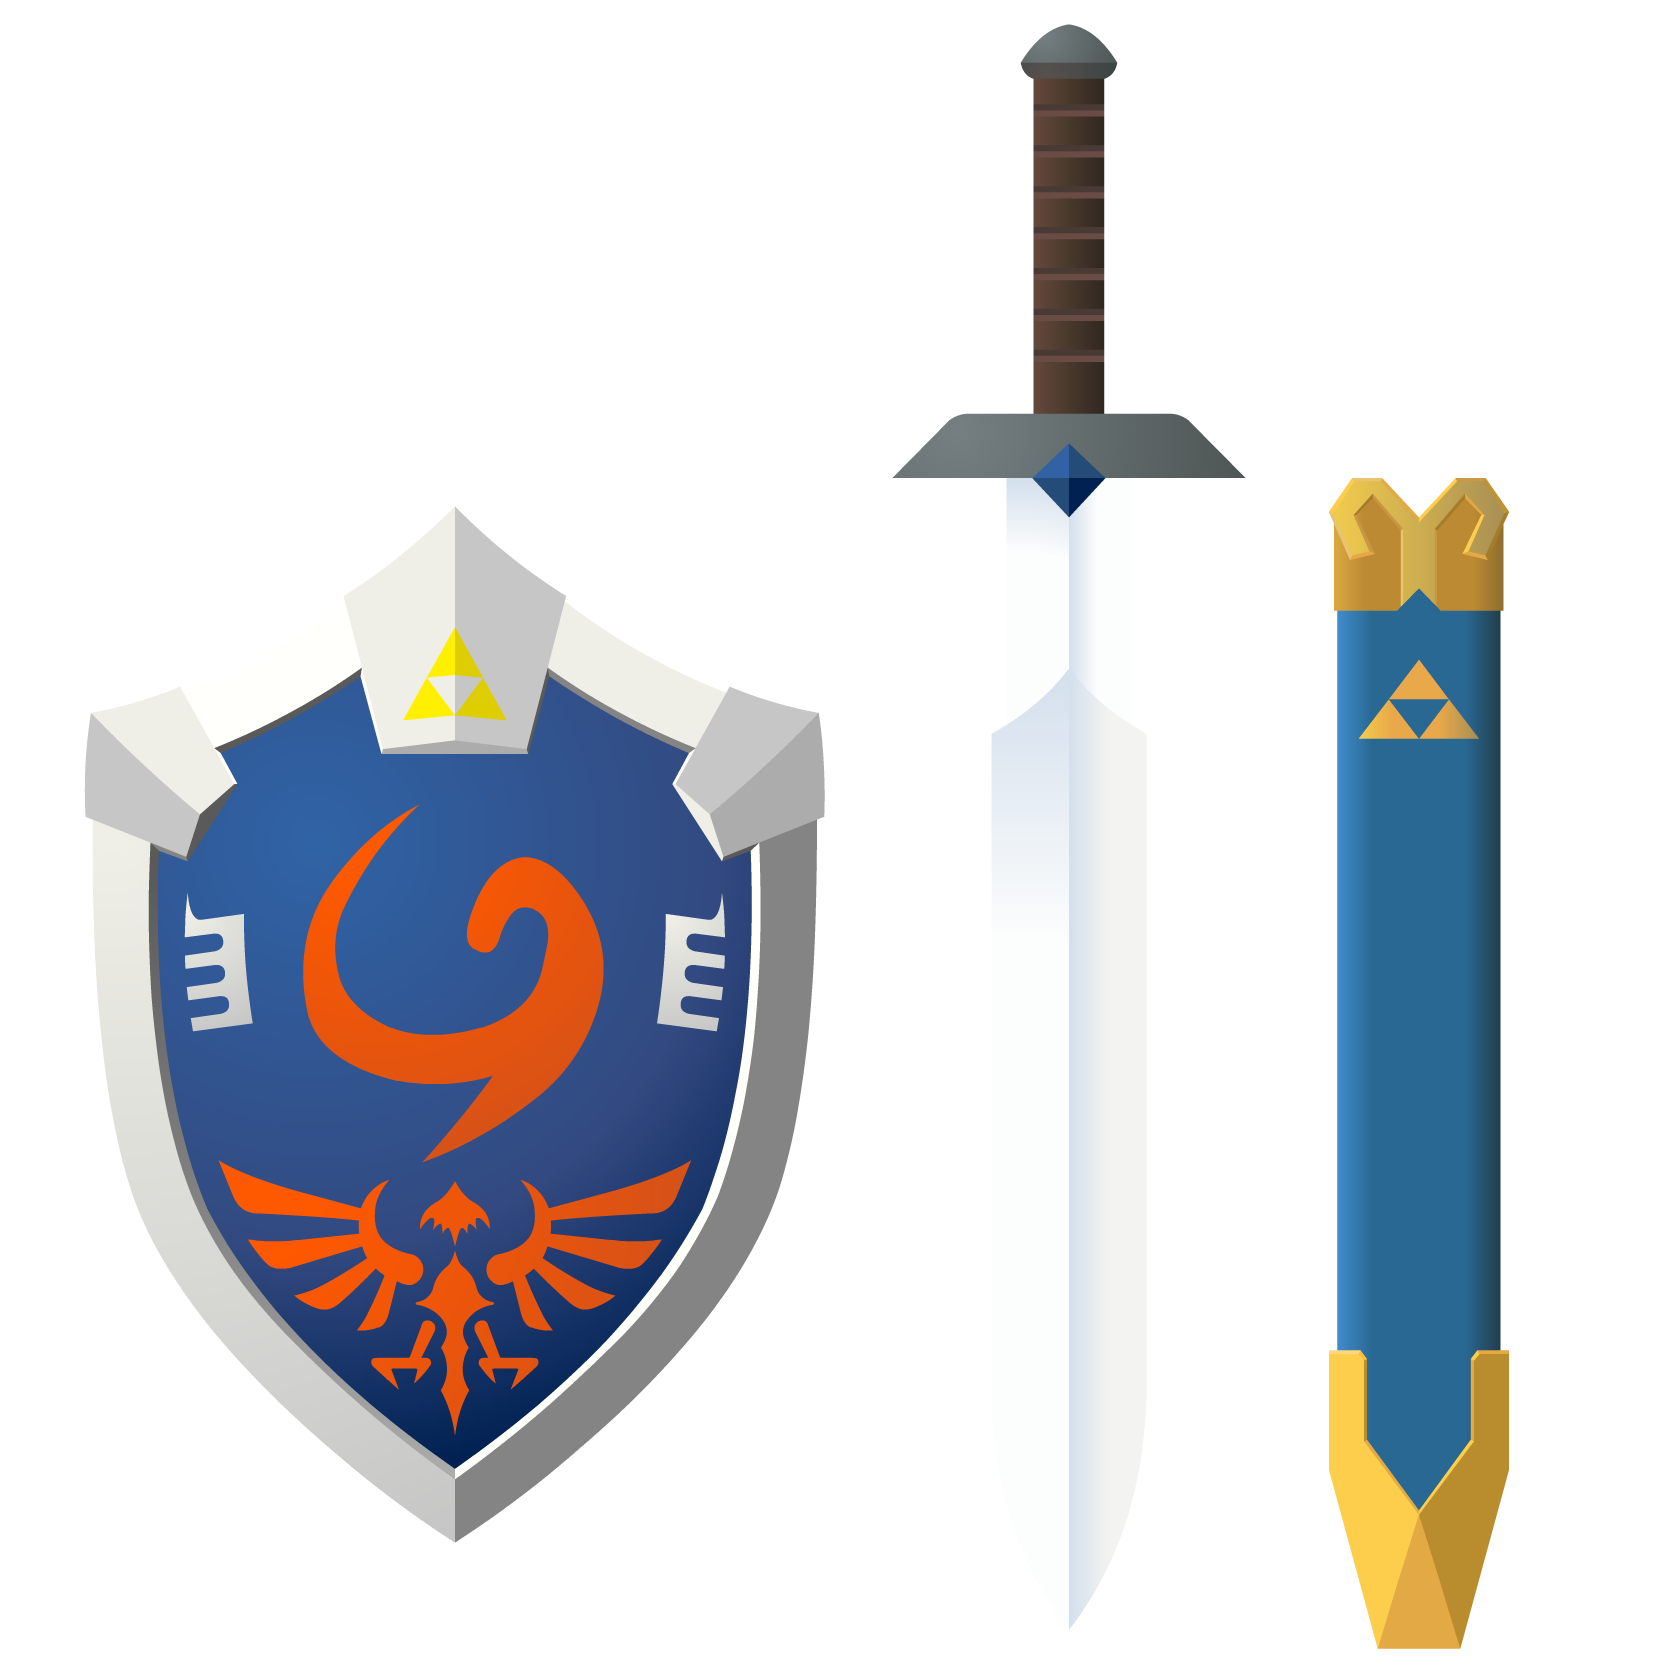 Request - Custom Sword 'n' Shield by Doctor-G on DeviantArt